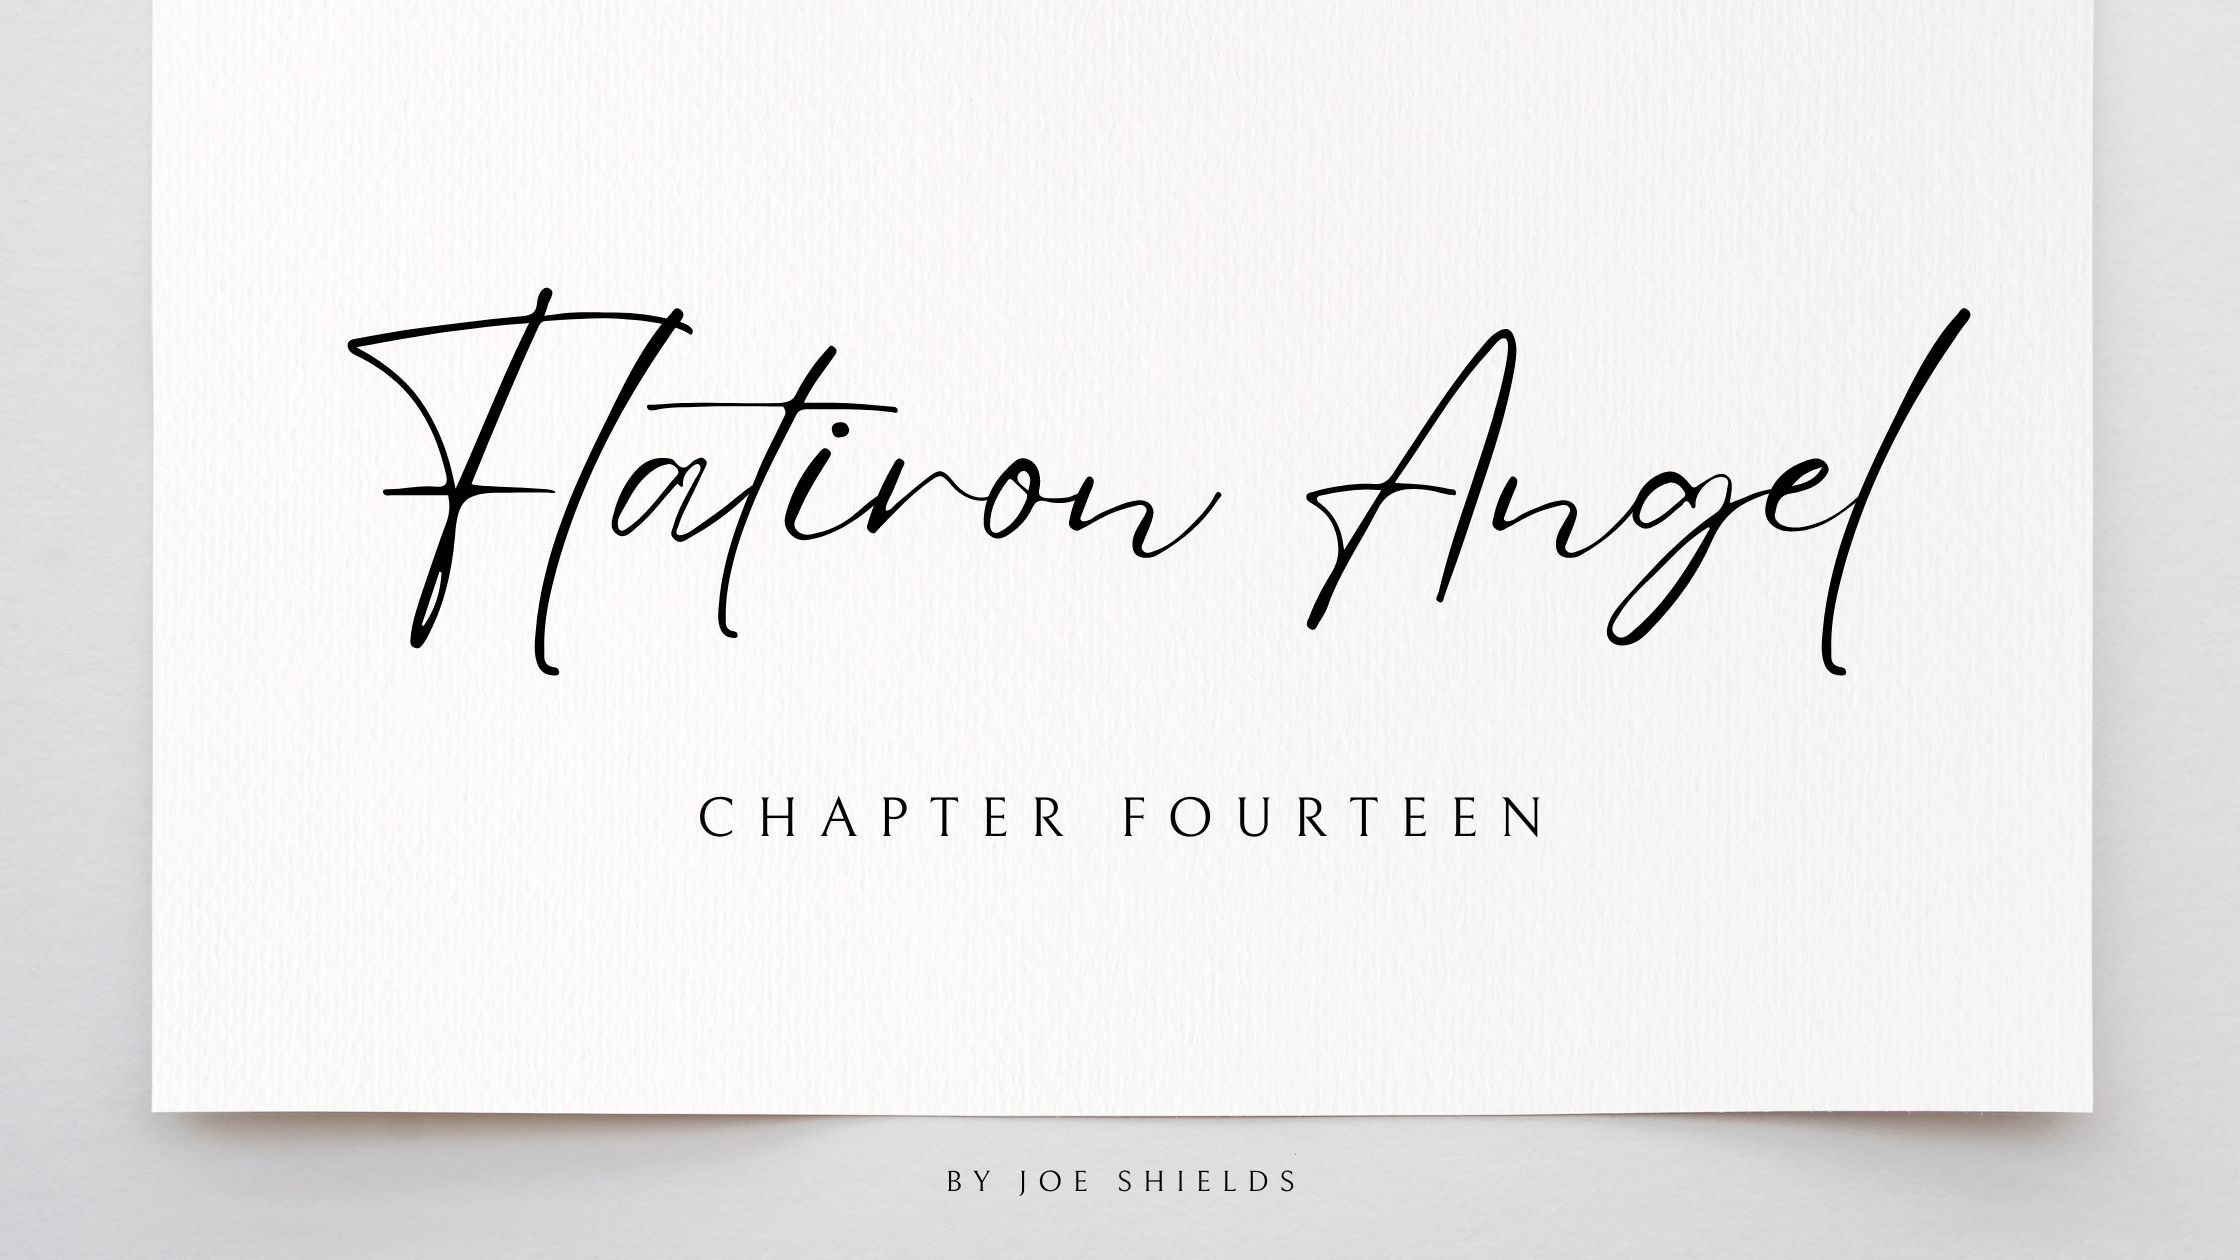 Flatiron-Angel-Chapter-Fourteen-by-Joe-Shields